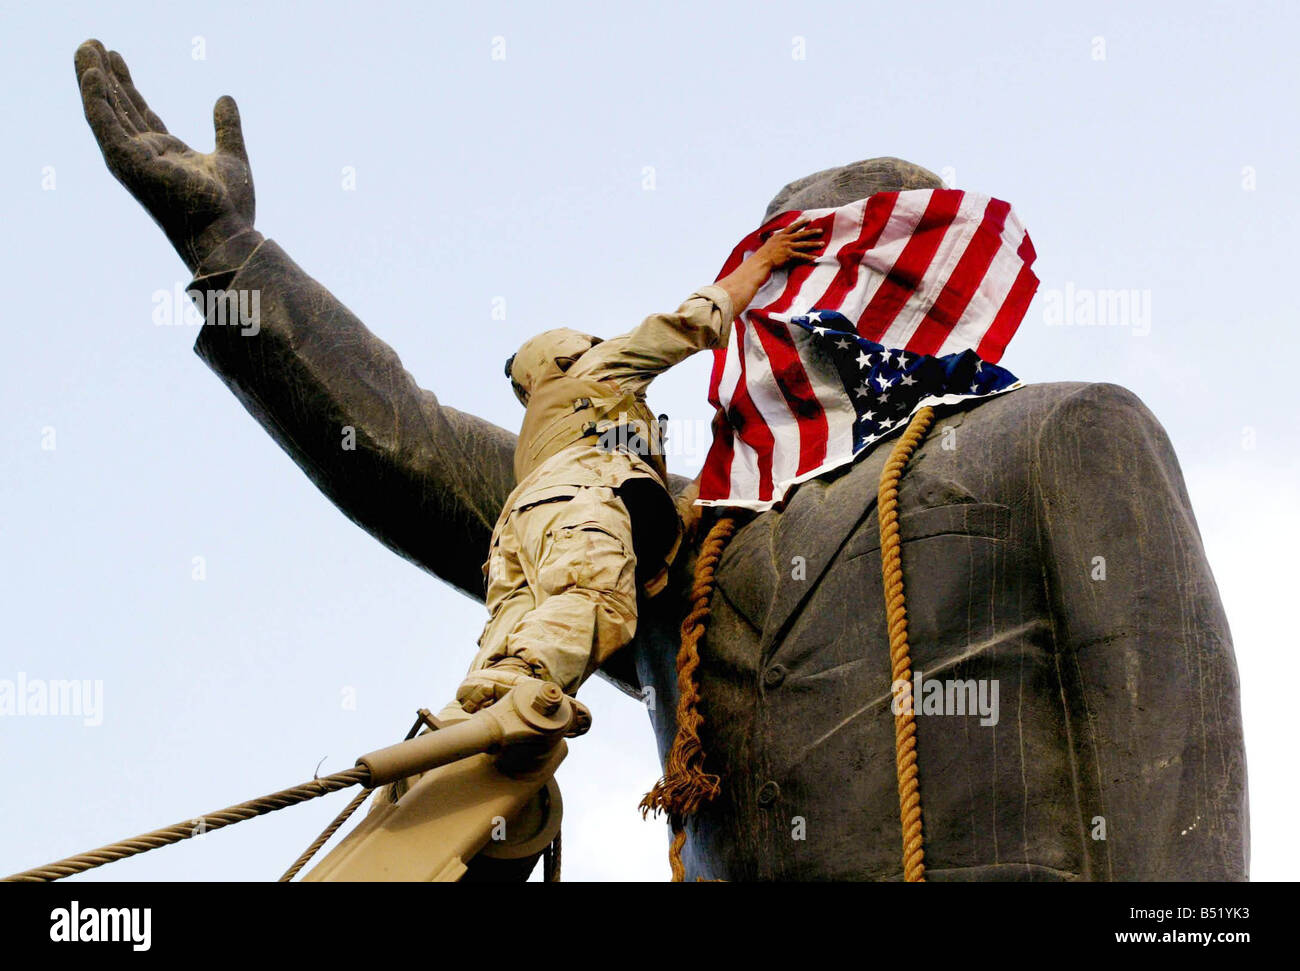 Bagdad-Irak April 2003 ist der irakische Präsident Saddam Hussein s Statue in Bagdad s al Fardous 9. April 2003 Platz abgerissen Witz Stockfoto